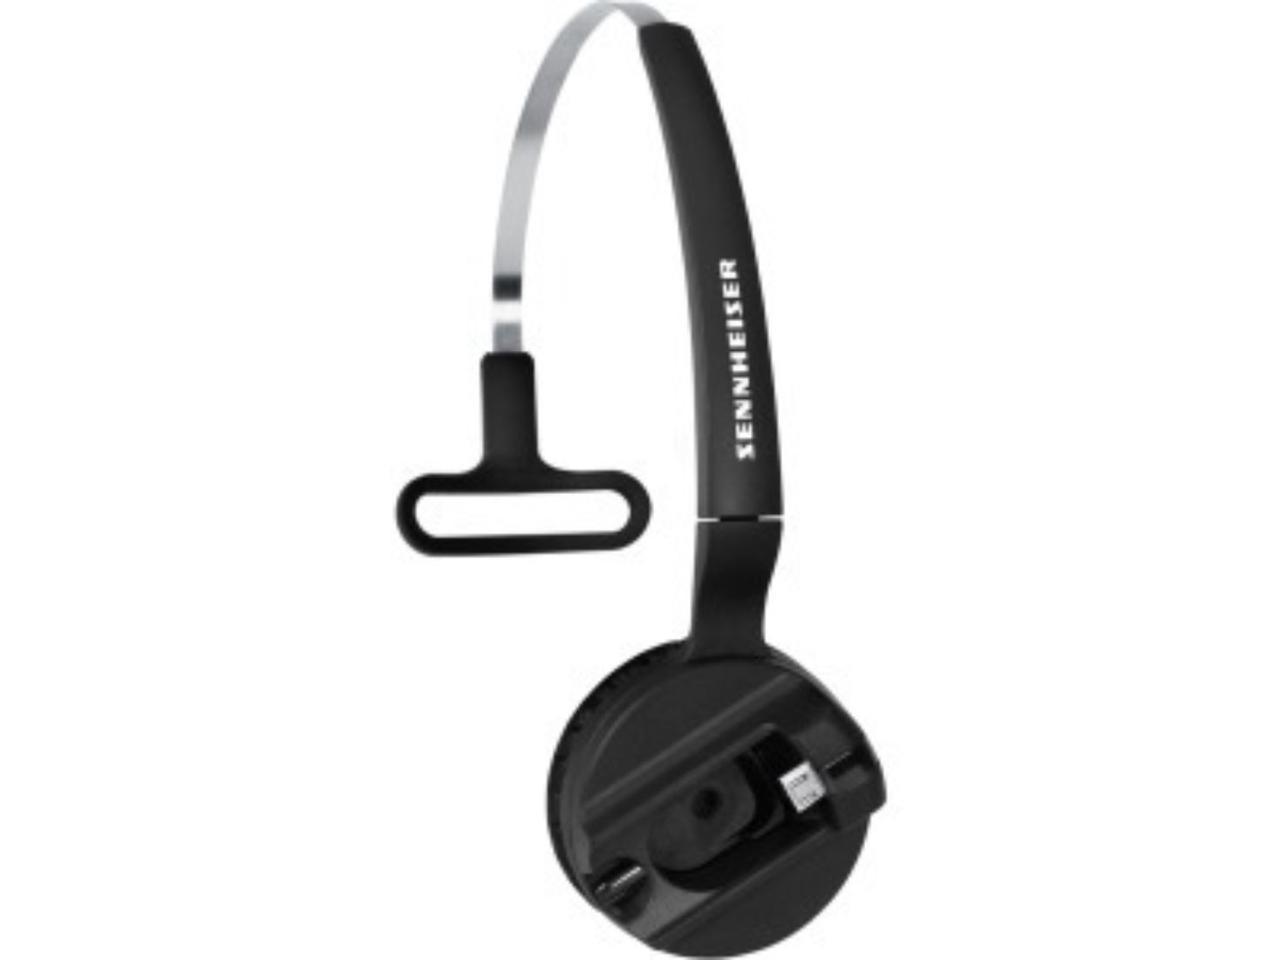 Sennheiser Headband For The Presence Mobile Series Headsets